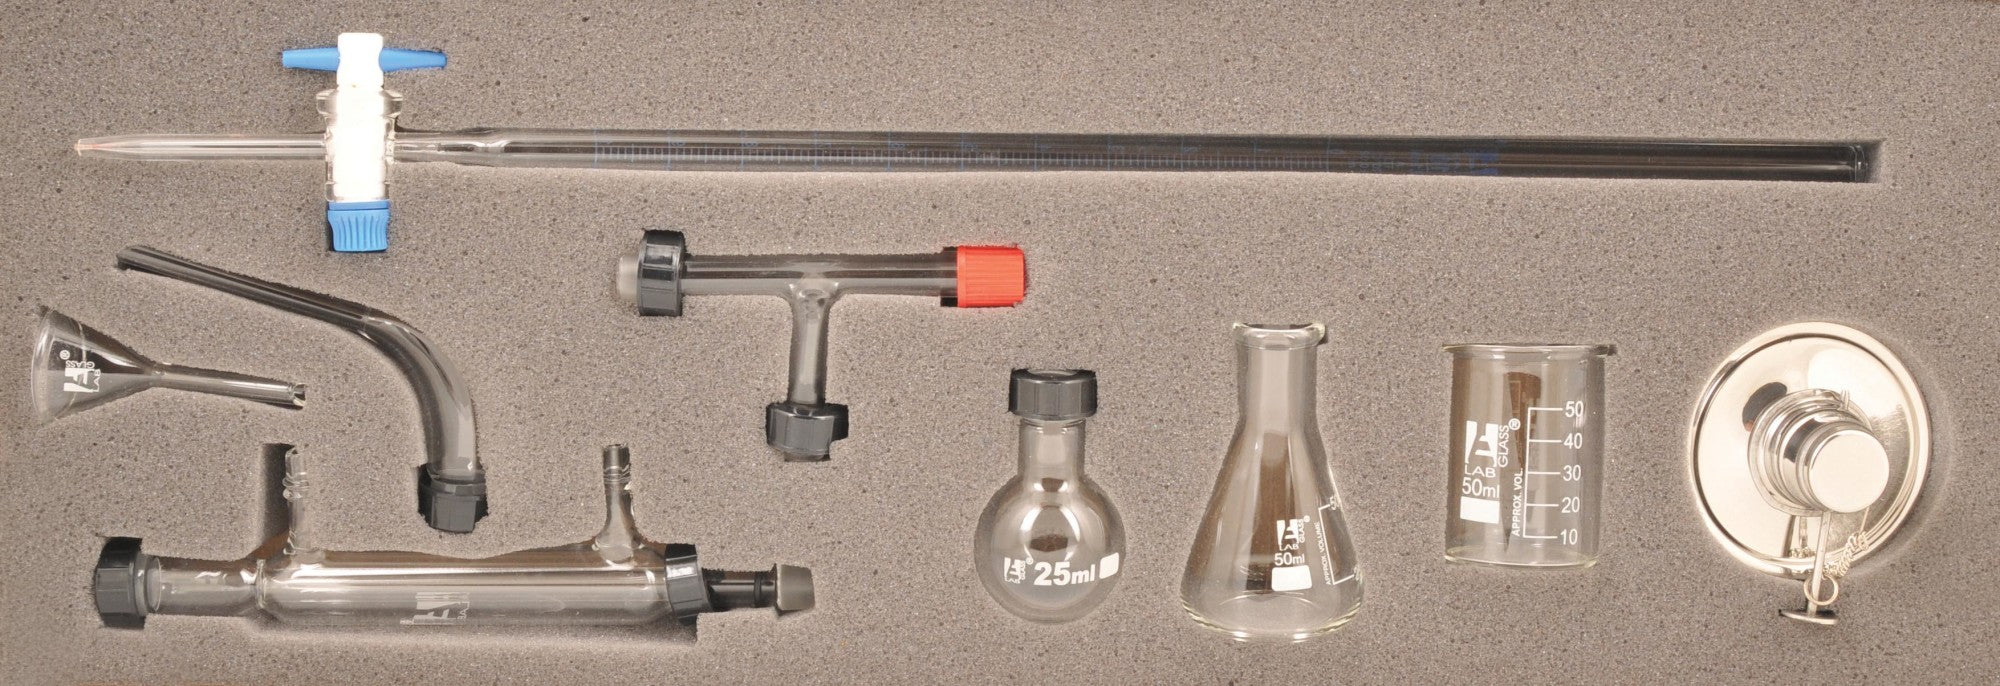 25ml Micro Glass Distillation Kit - 9 Pieces